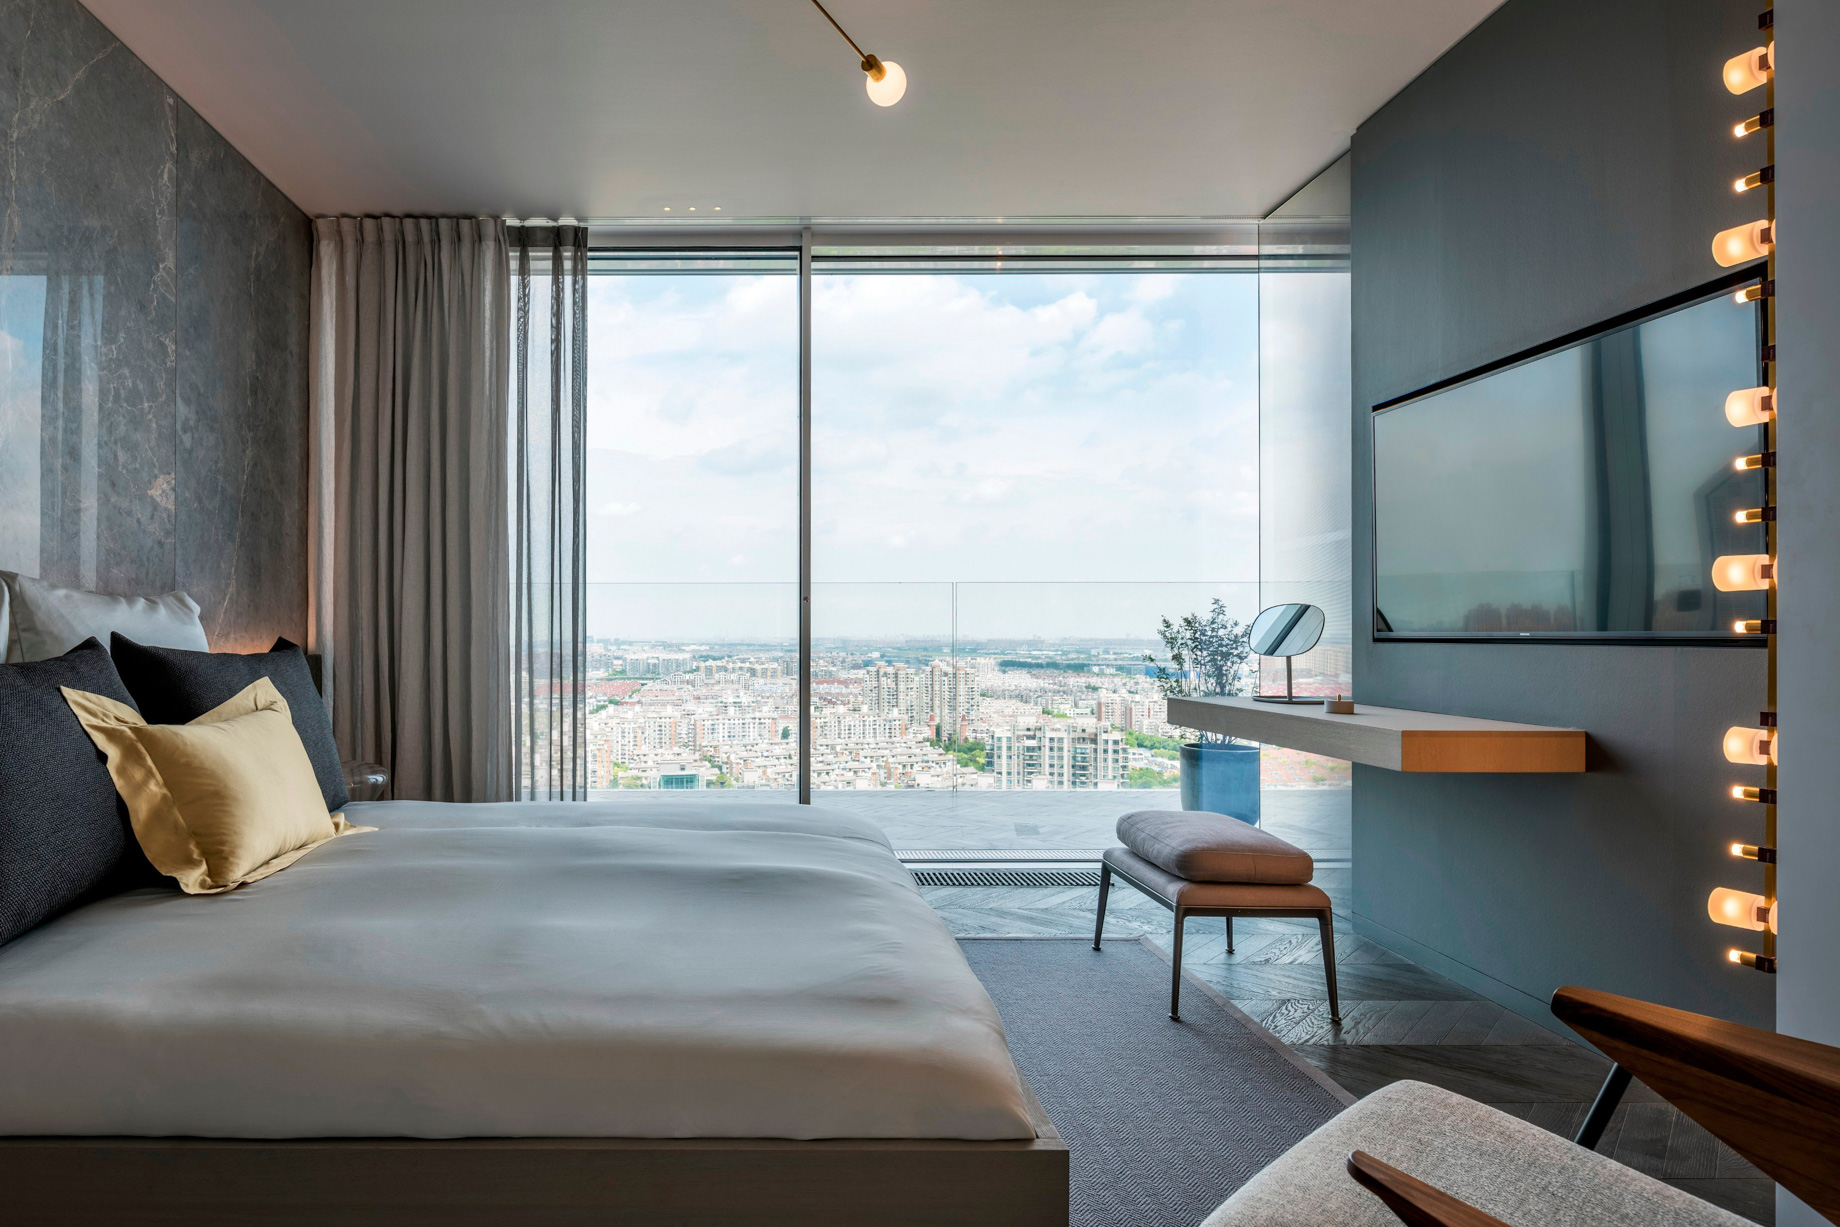 Shades of Grey Apartment Interior Design Shanghai, China - Ippolito Fleitz Group - Bedroom View